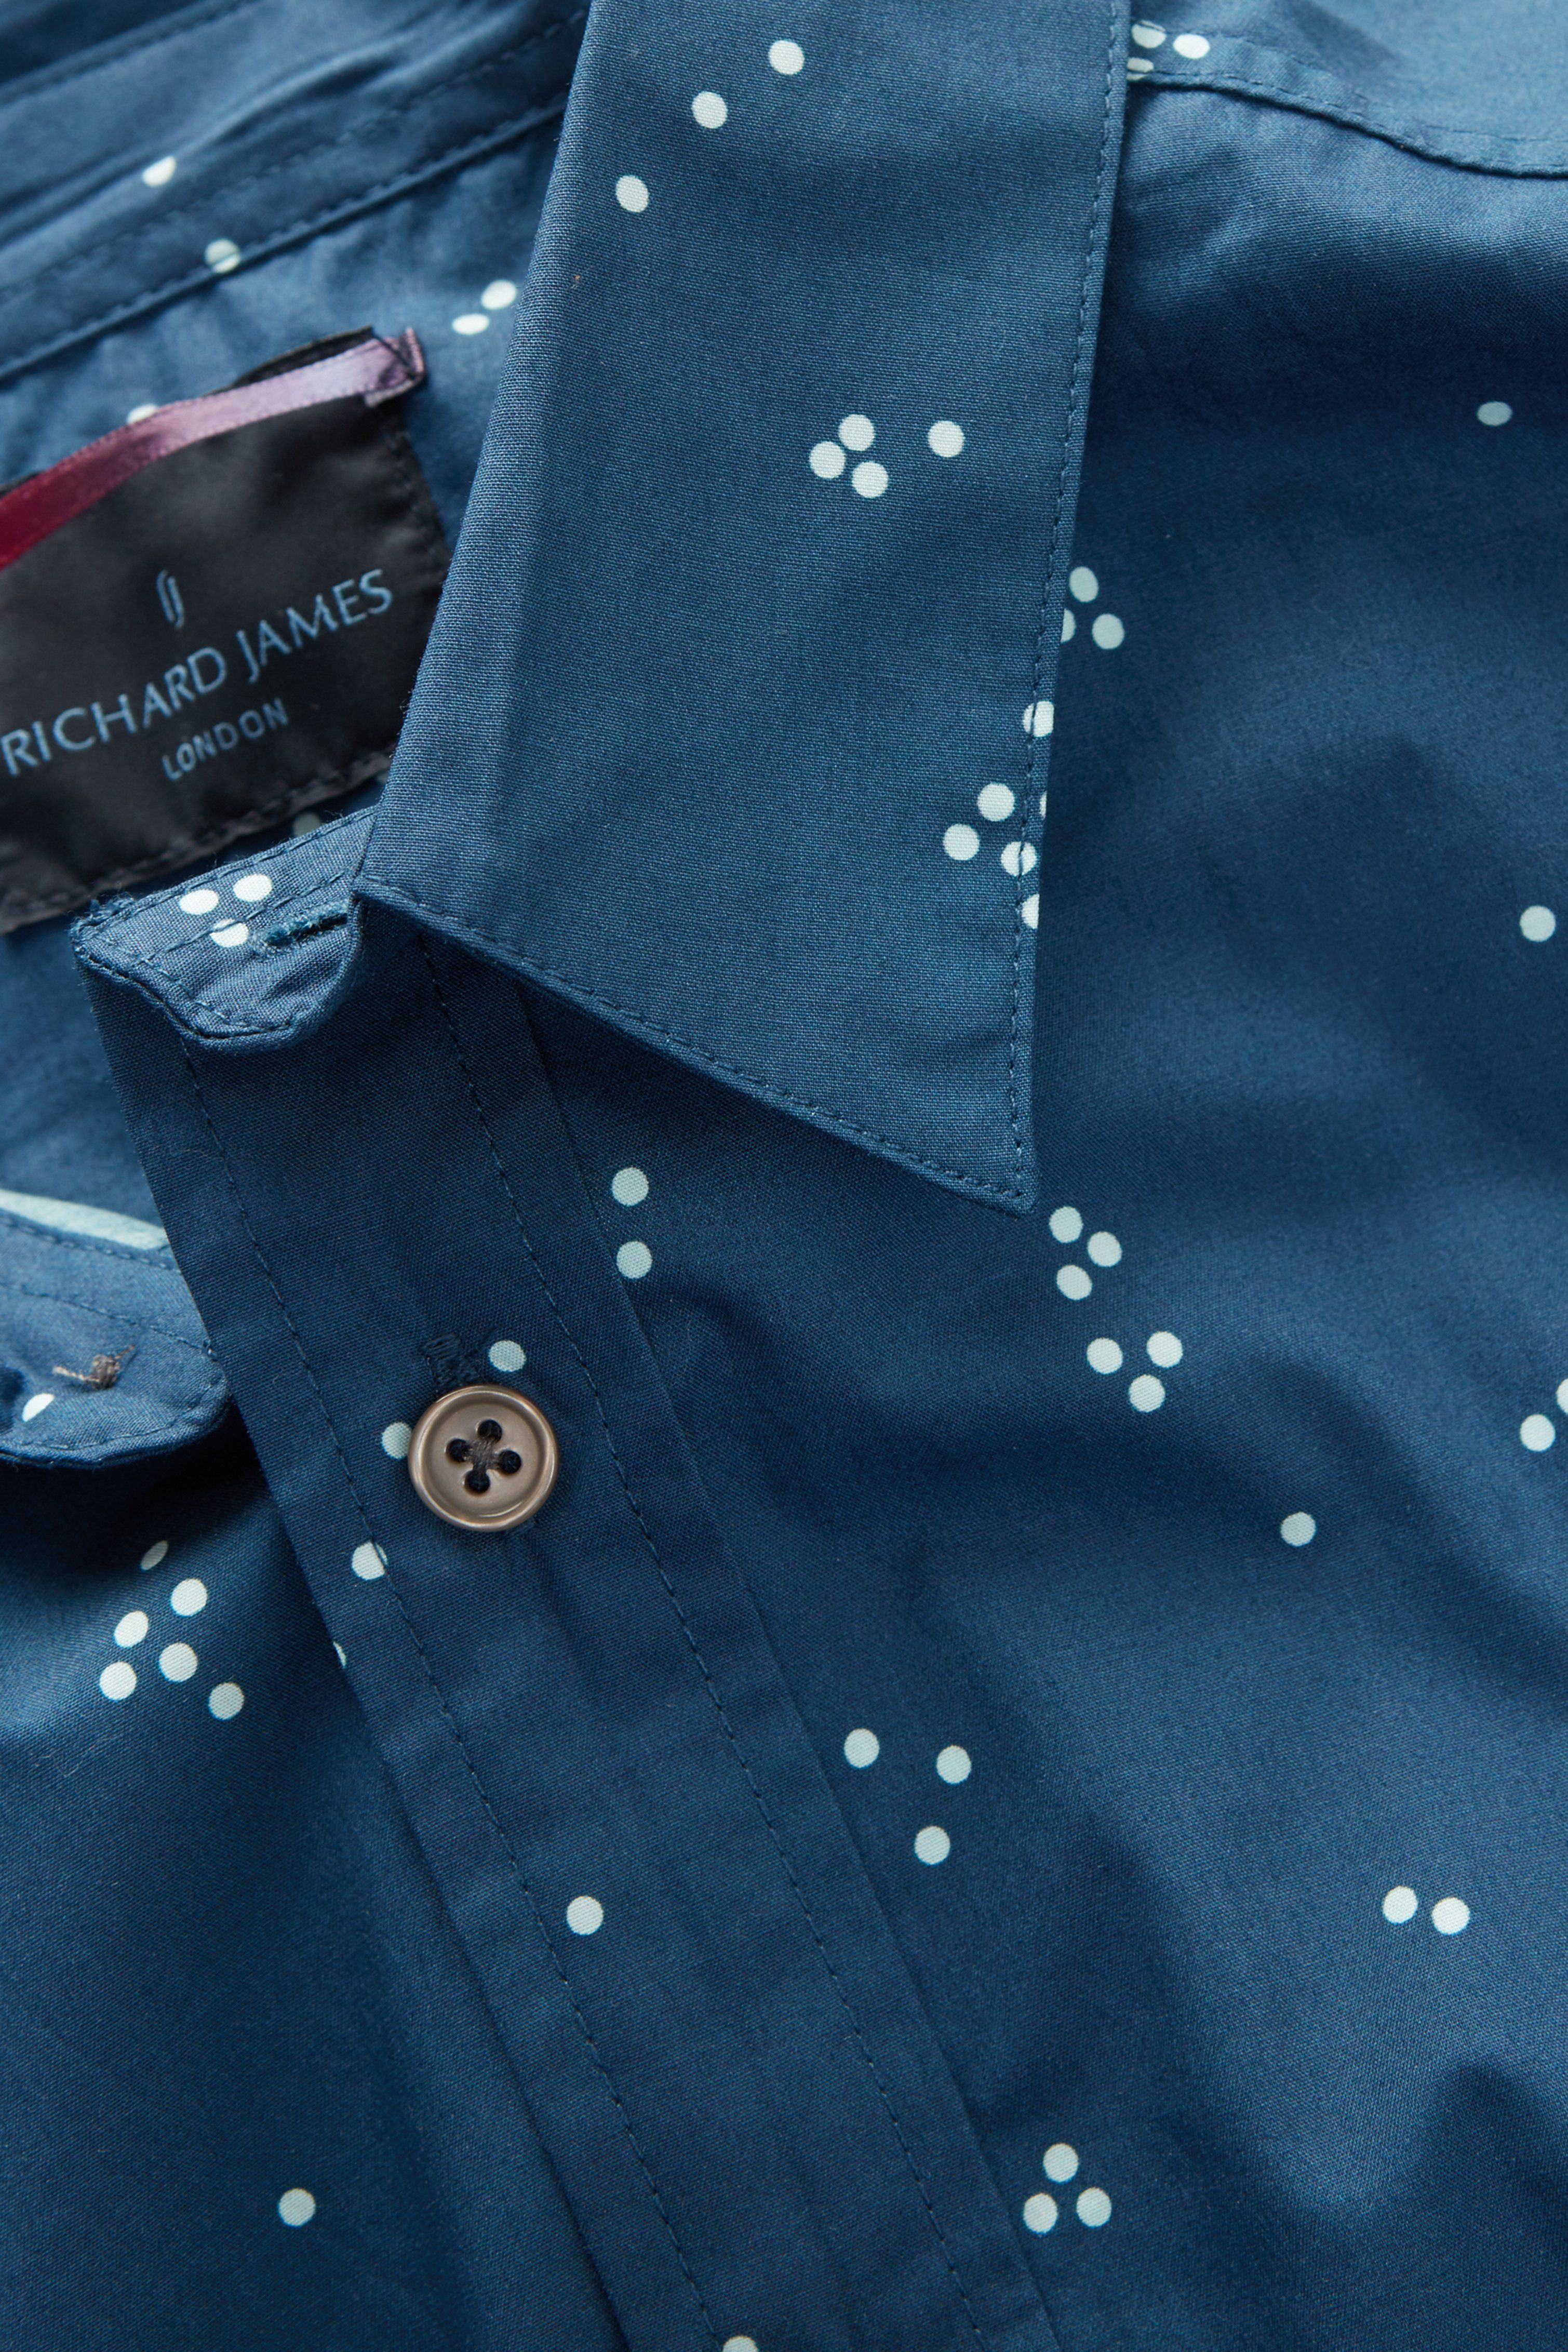 Random Dots Short Sleeve Shirt
RJL0047B
Button front short-sleeve printed shirt in plain weave cotton.
KEY: Everyday, Event, Lightweight. 
DETAIL: Seven-button front, soft collar, side vents, locker loop. 
FABRICATION: 100% cotton 
 